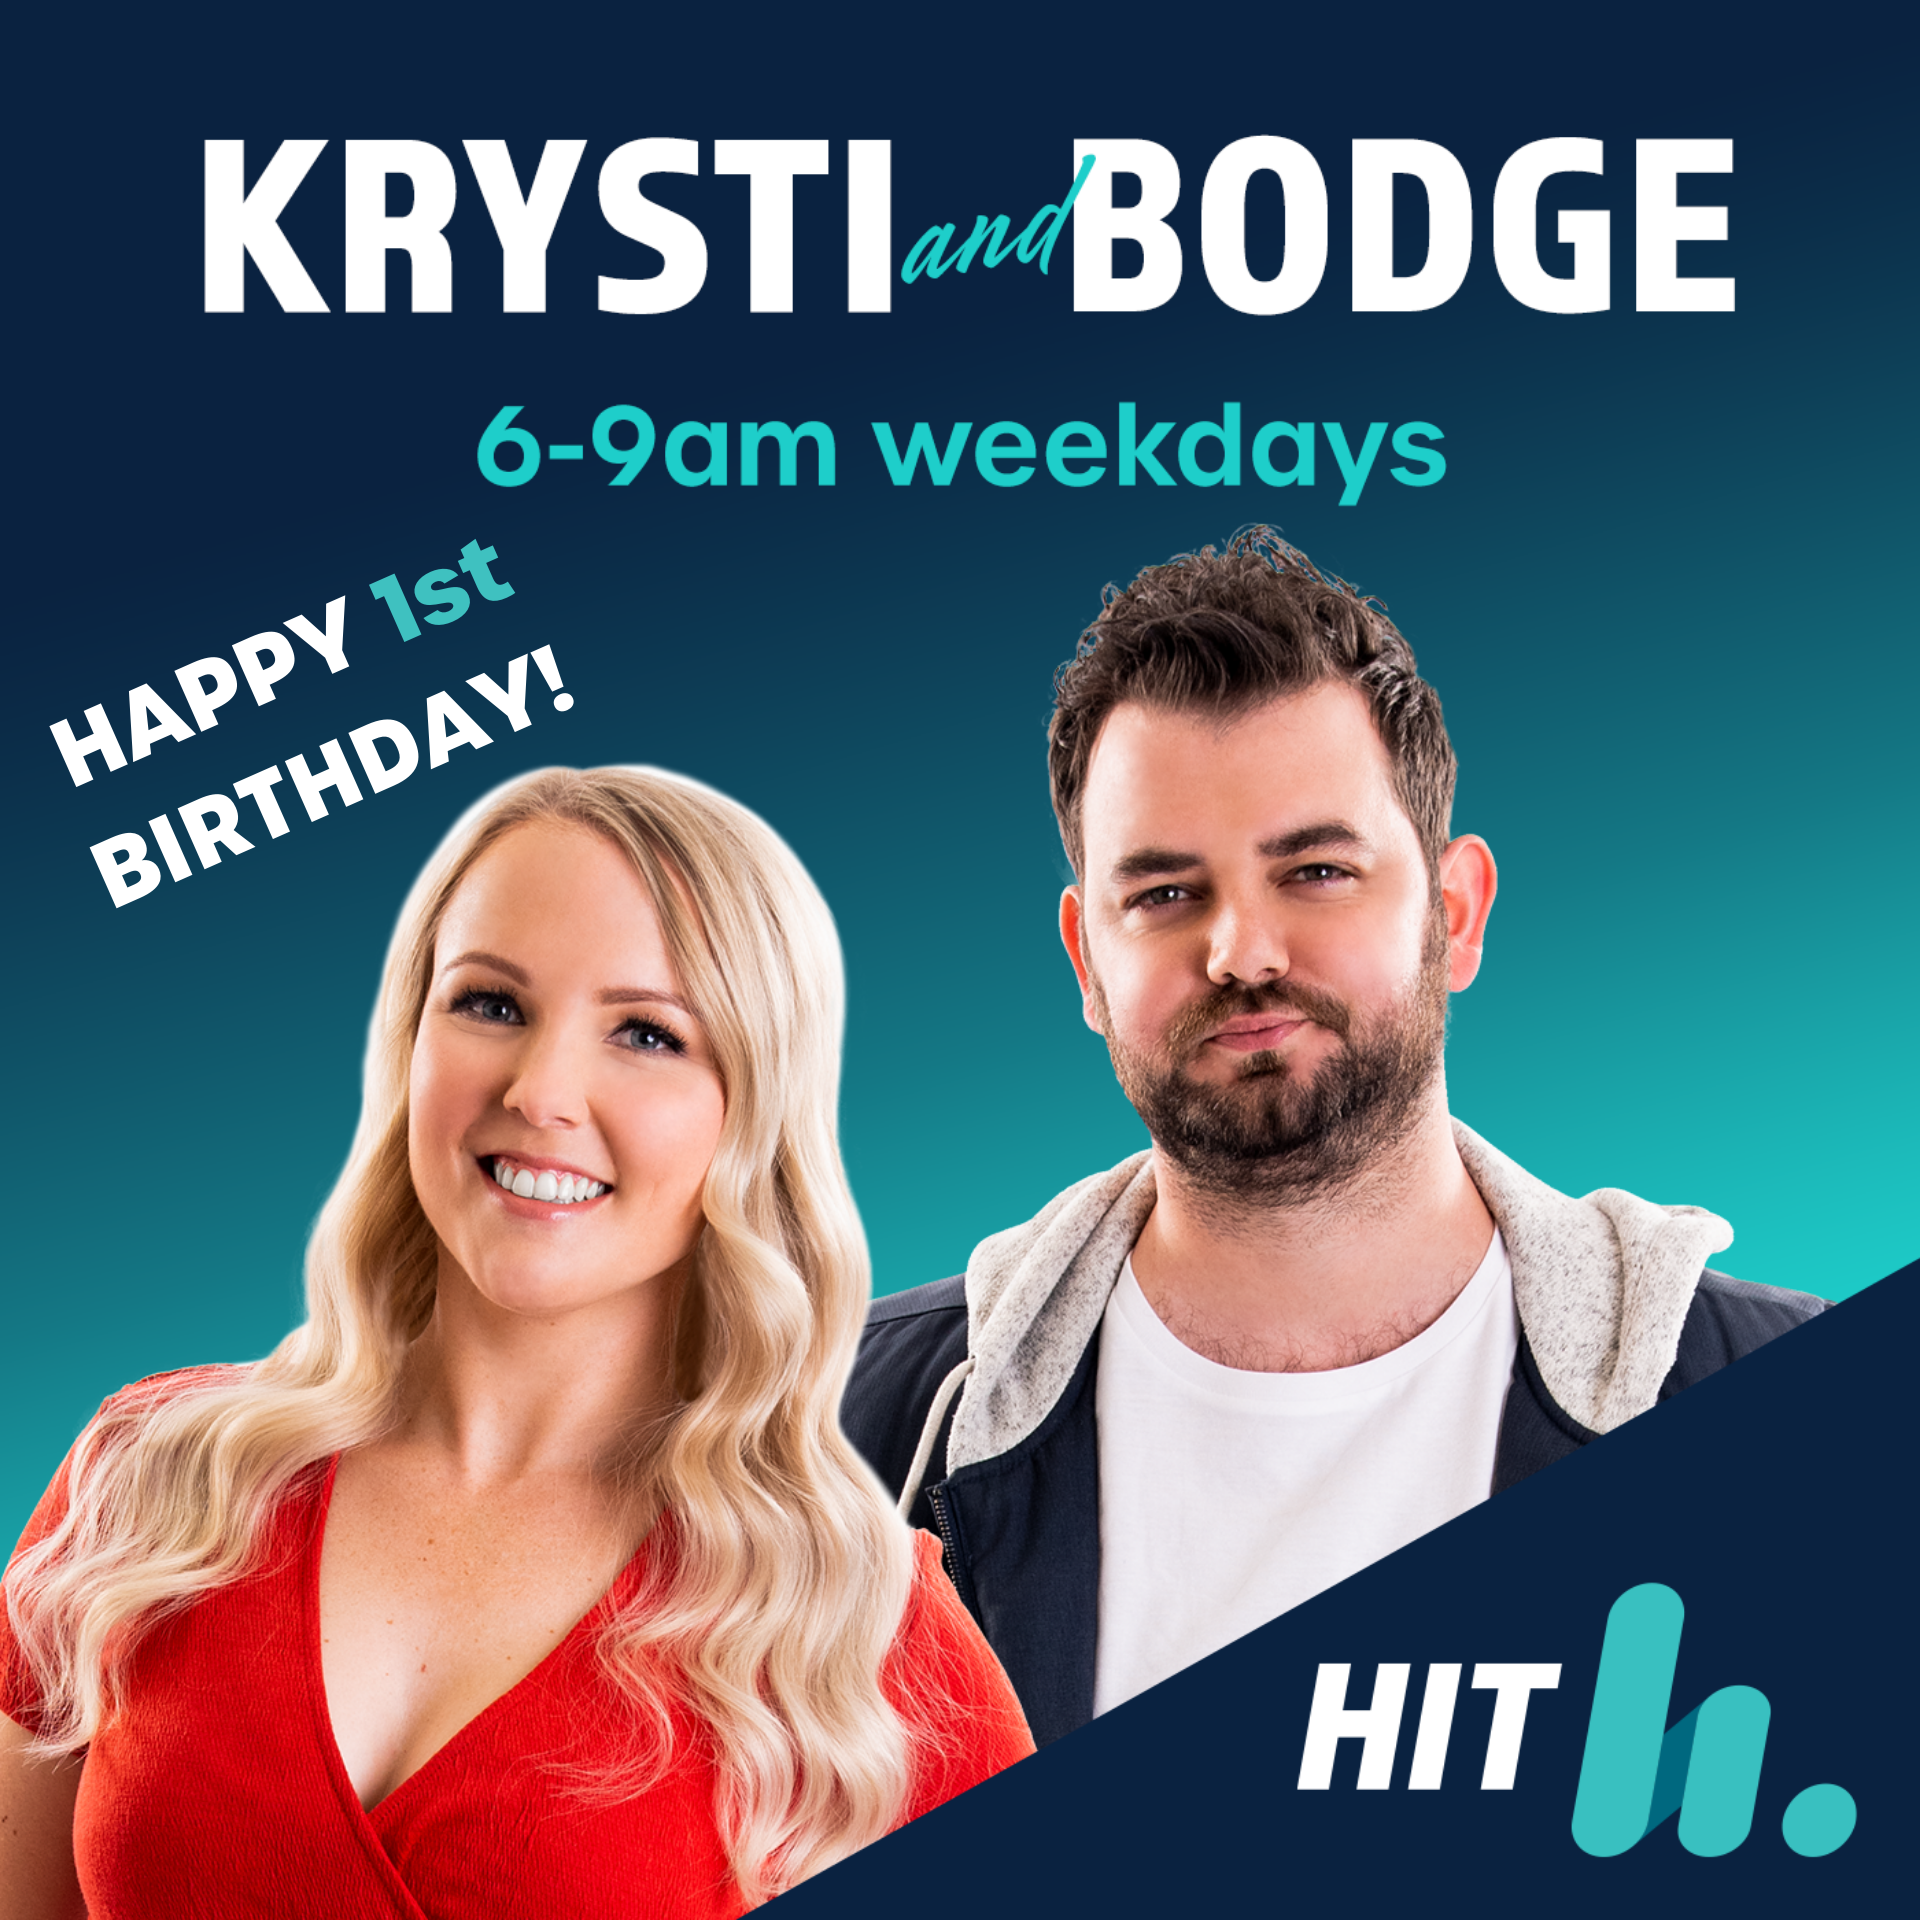 Krysti & Bodge - Celebrating One Year On Air Together!